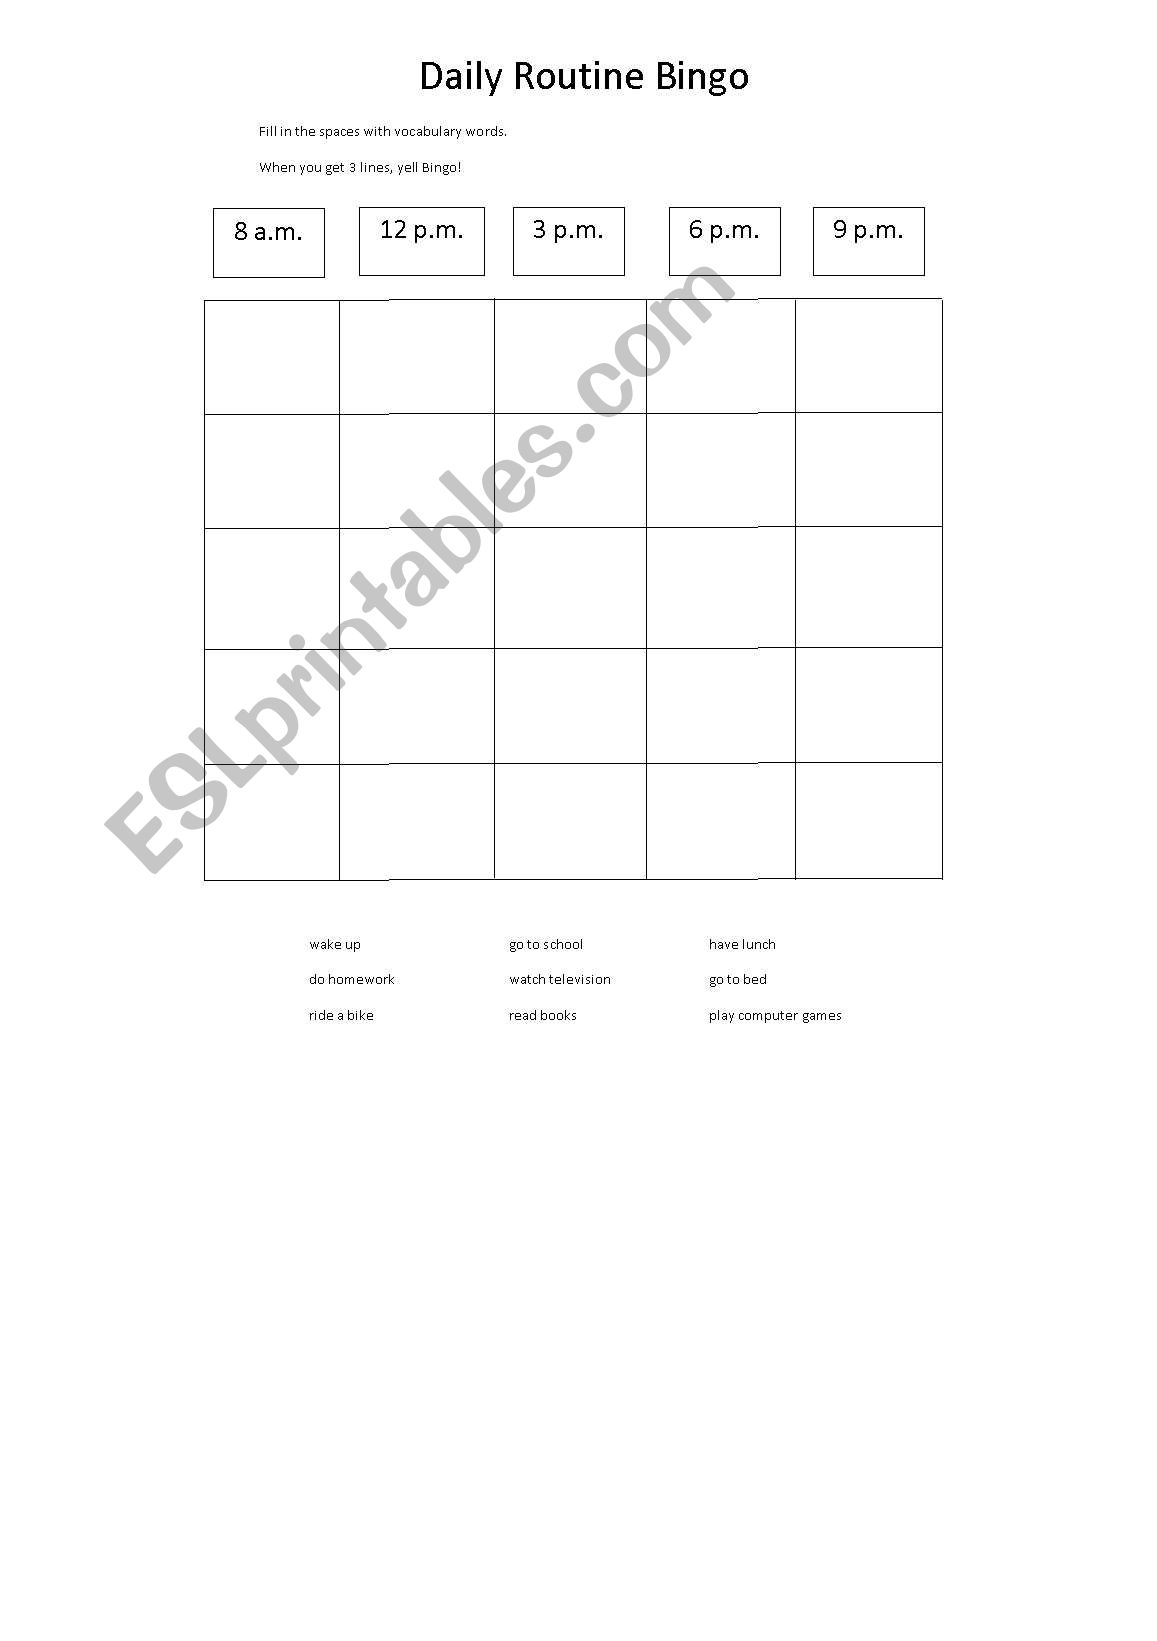 Daily Routine Bingo worksheet